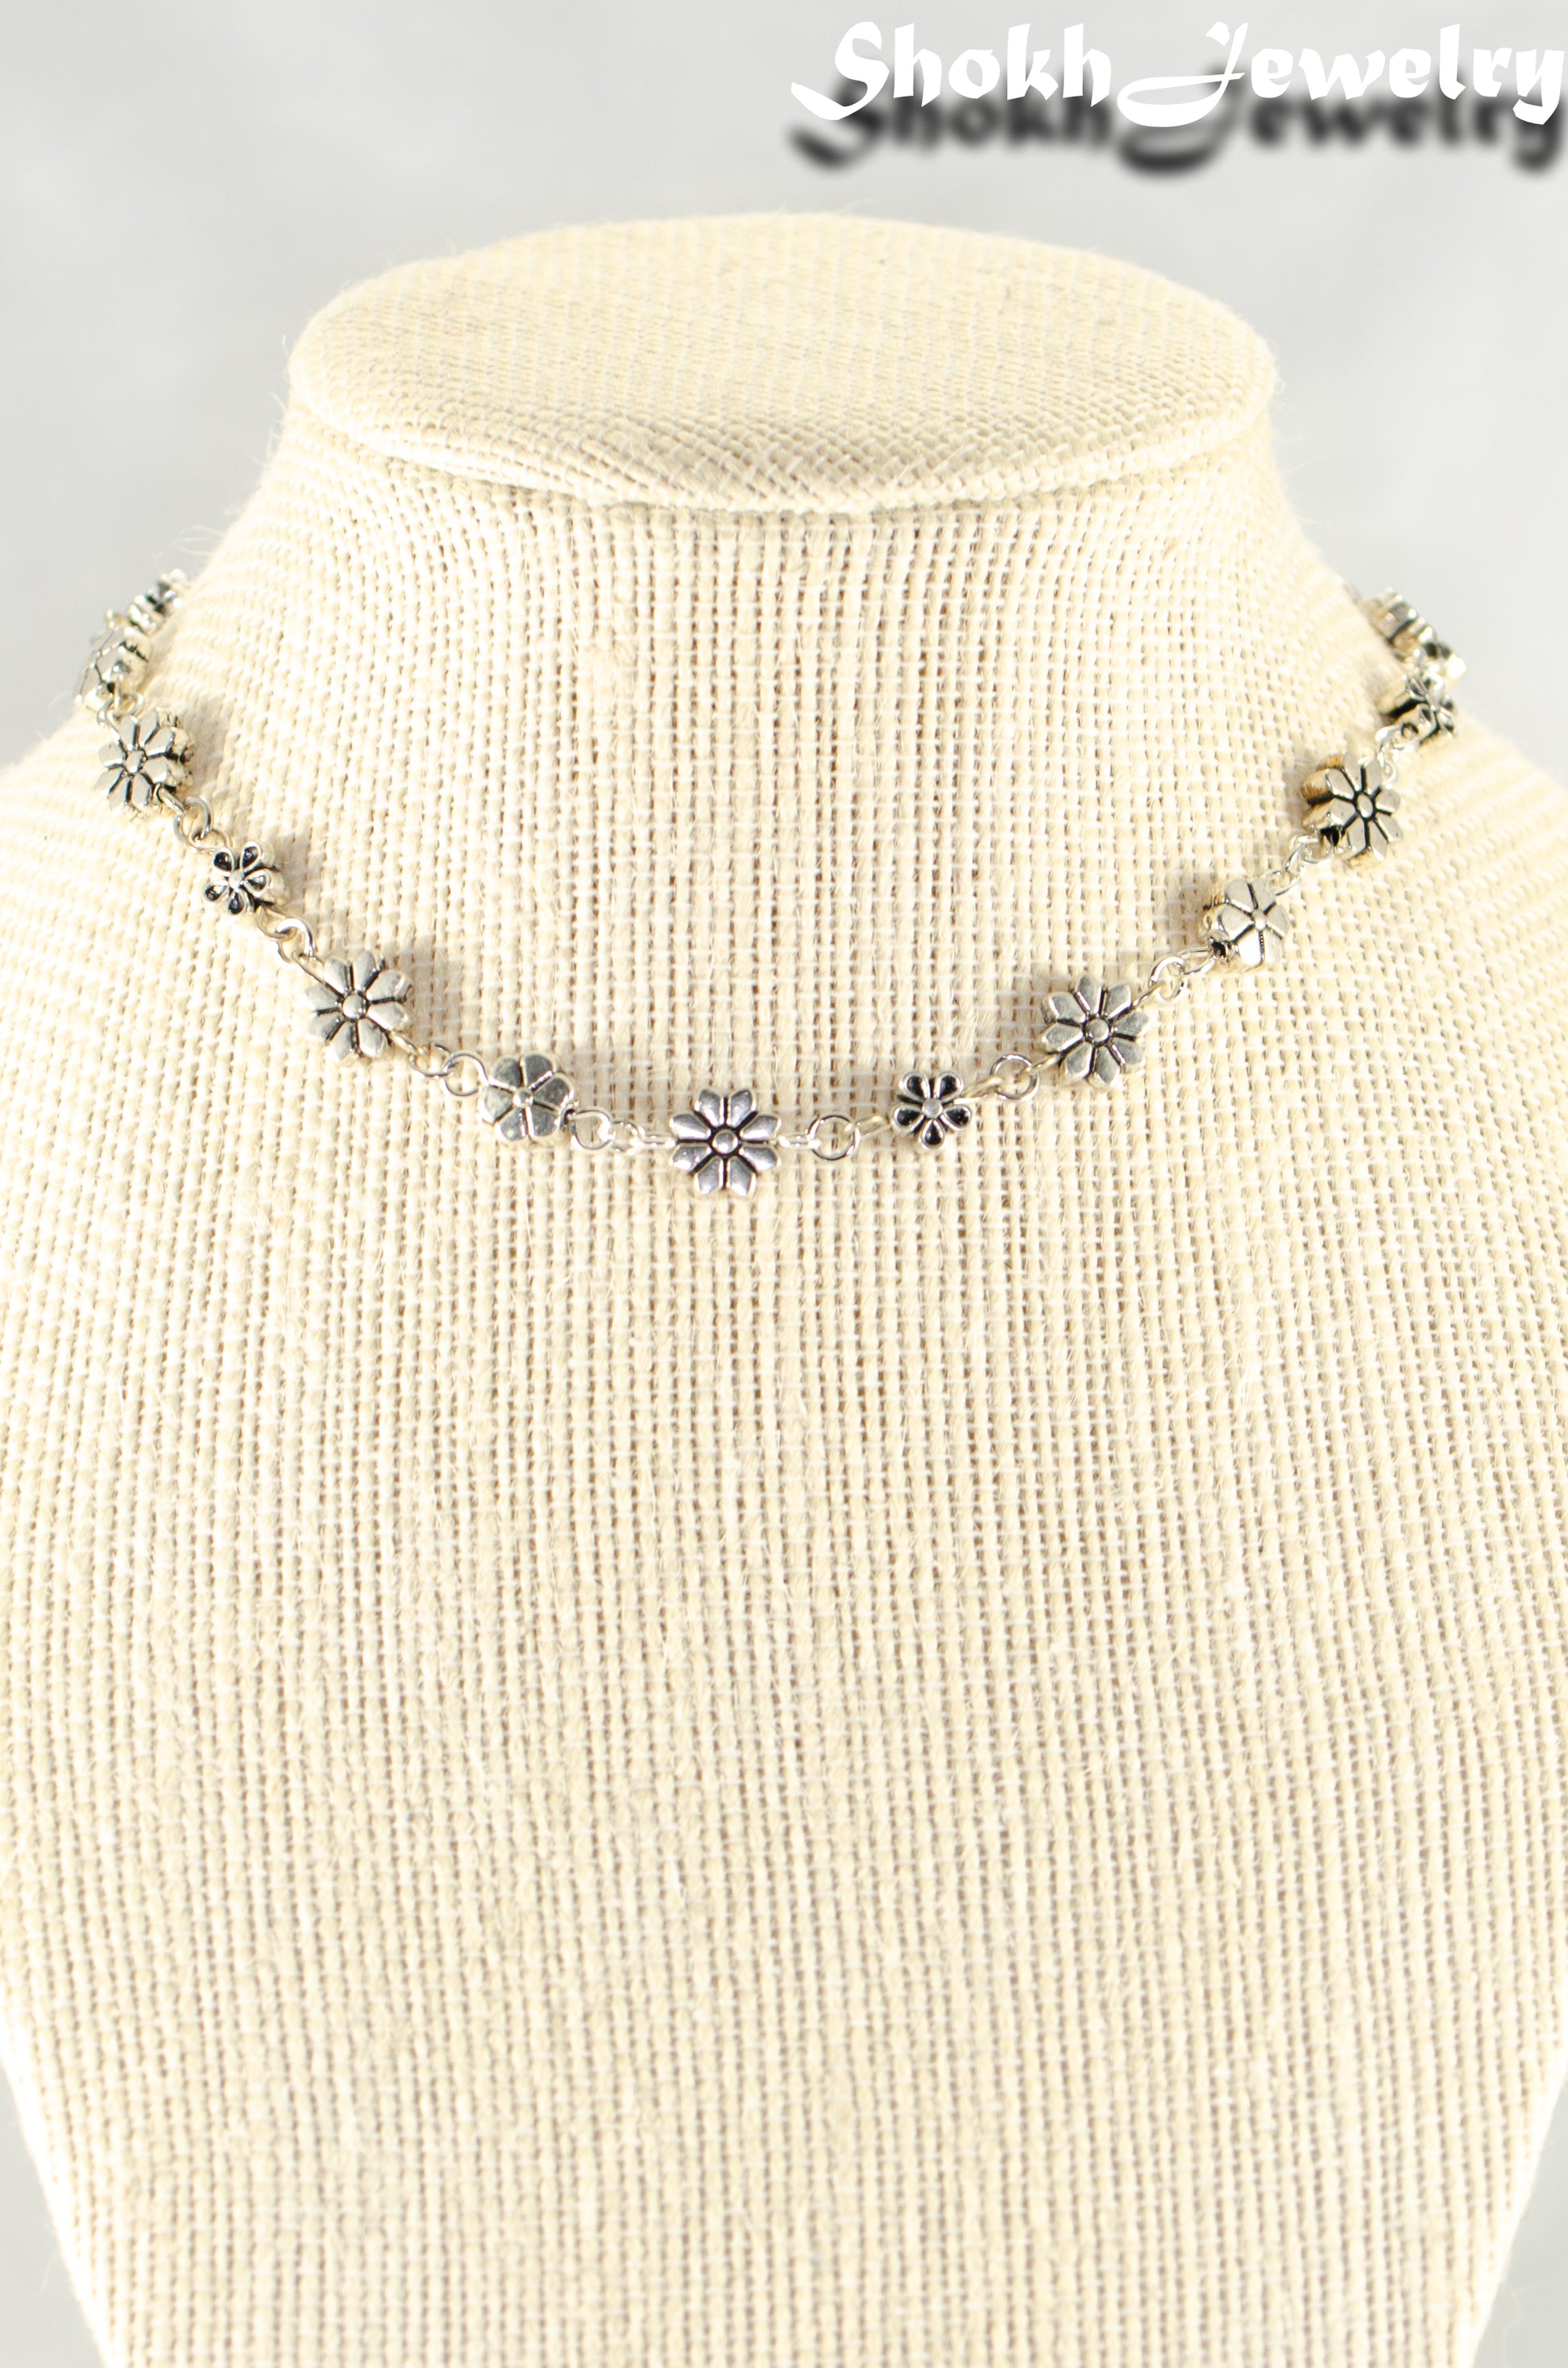 Close up of Dainty Tibetan Silver Flower Choker Necklace.